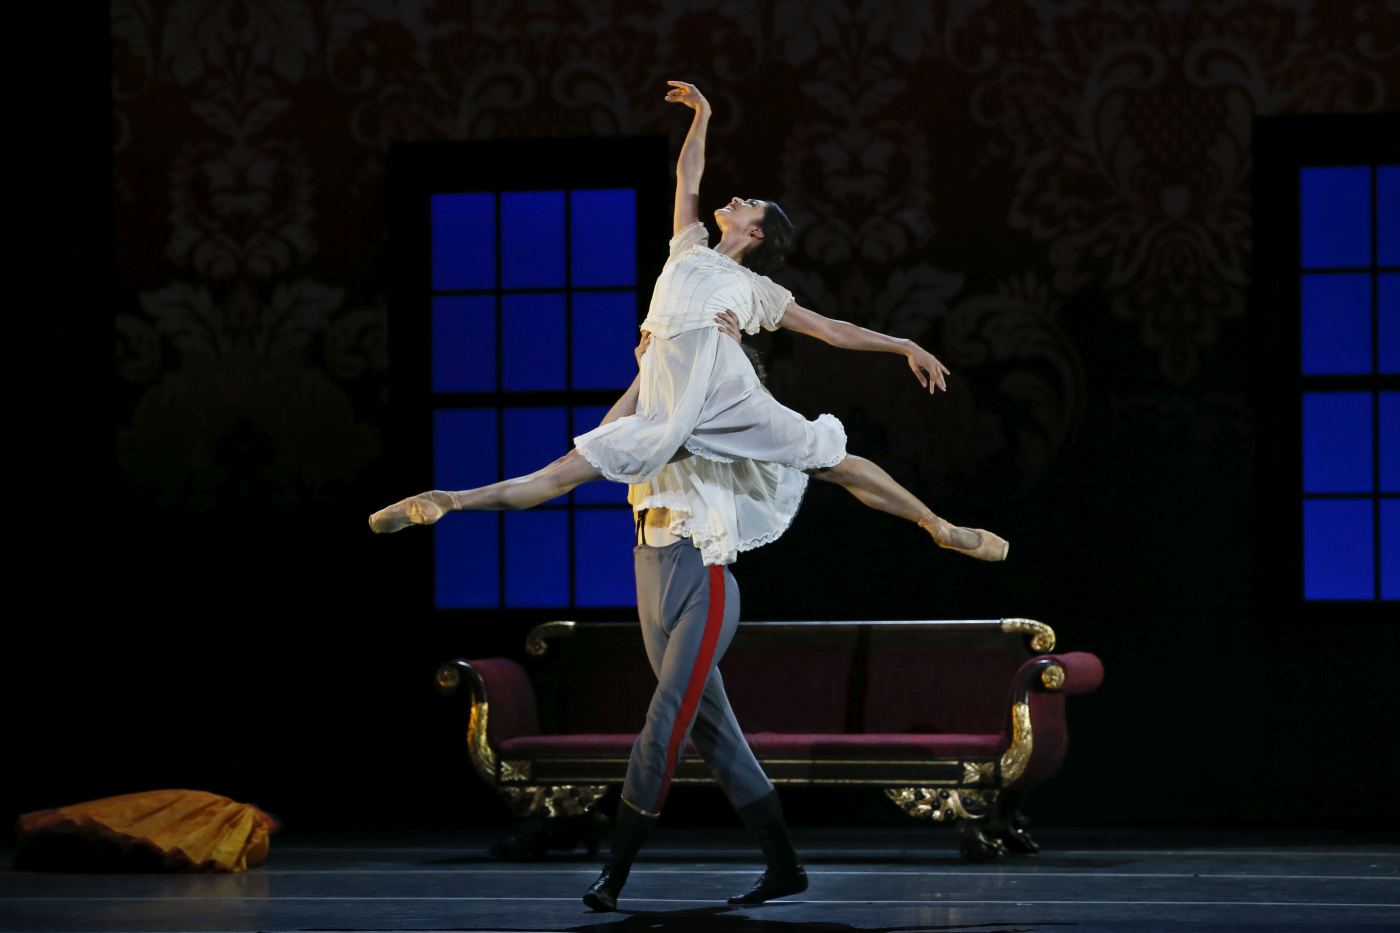 9. R.Hendricks (Anna Karenina) and C.Linnane (Count Alexei Vronsky), “Anna Karenina” by Y.Possokhov, The Australian Ballet 2022 © J.Busby